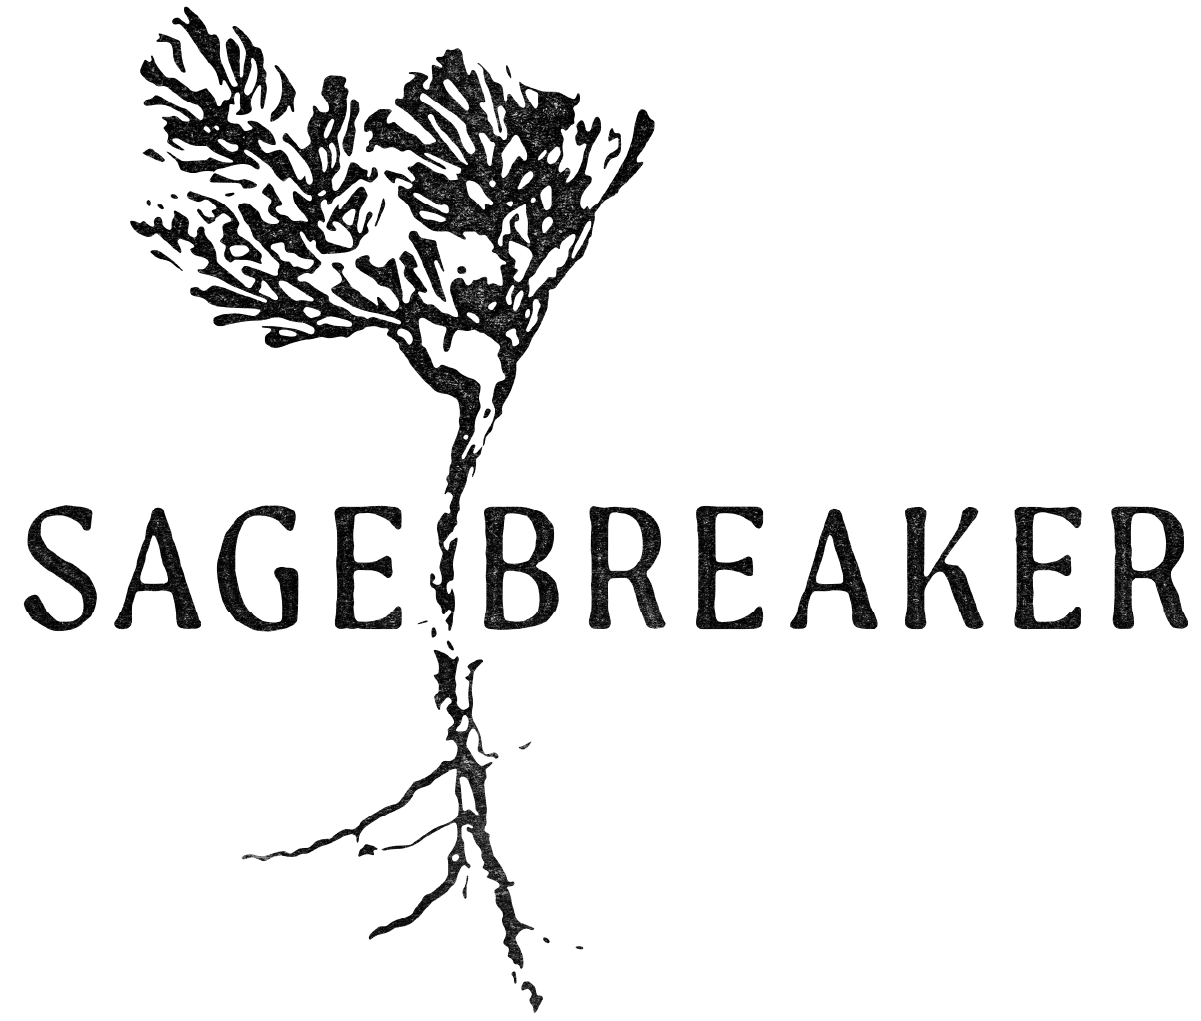 Sagebreaker brand name with logo art of sagebrush